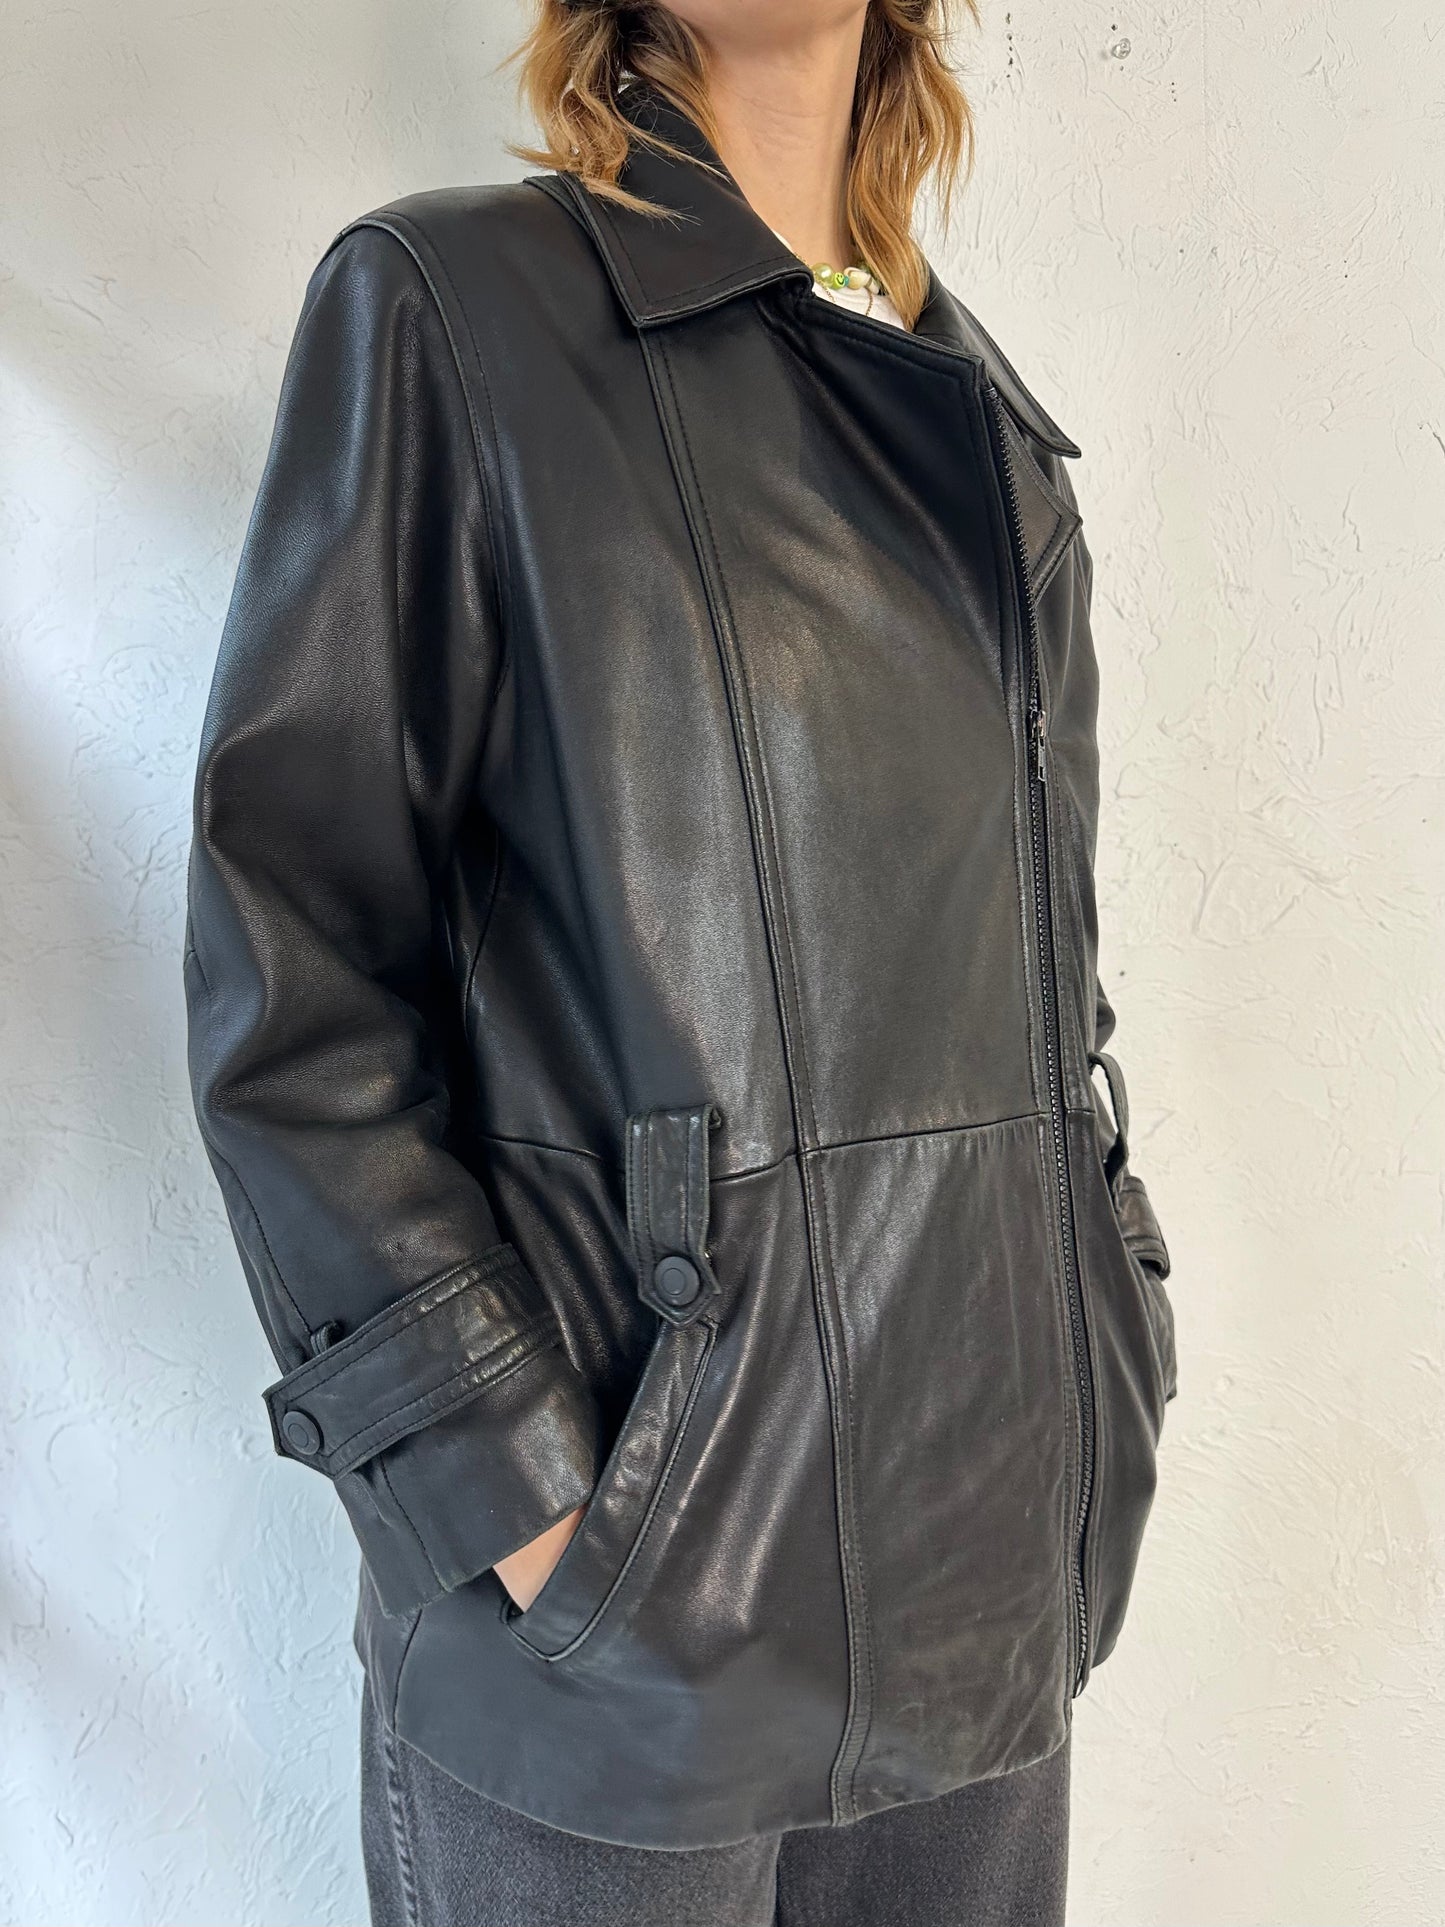 90s 'Danier' Lined Black Leather Jacket / Small - Medium